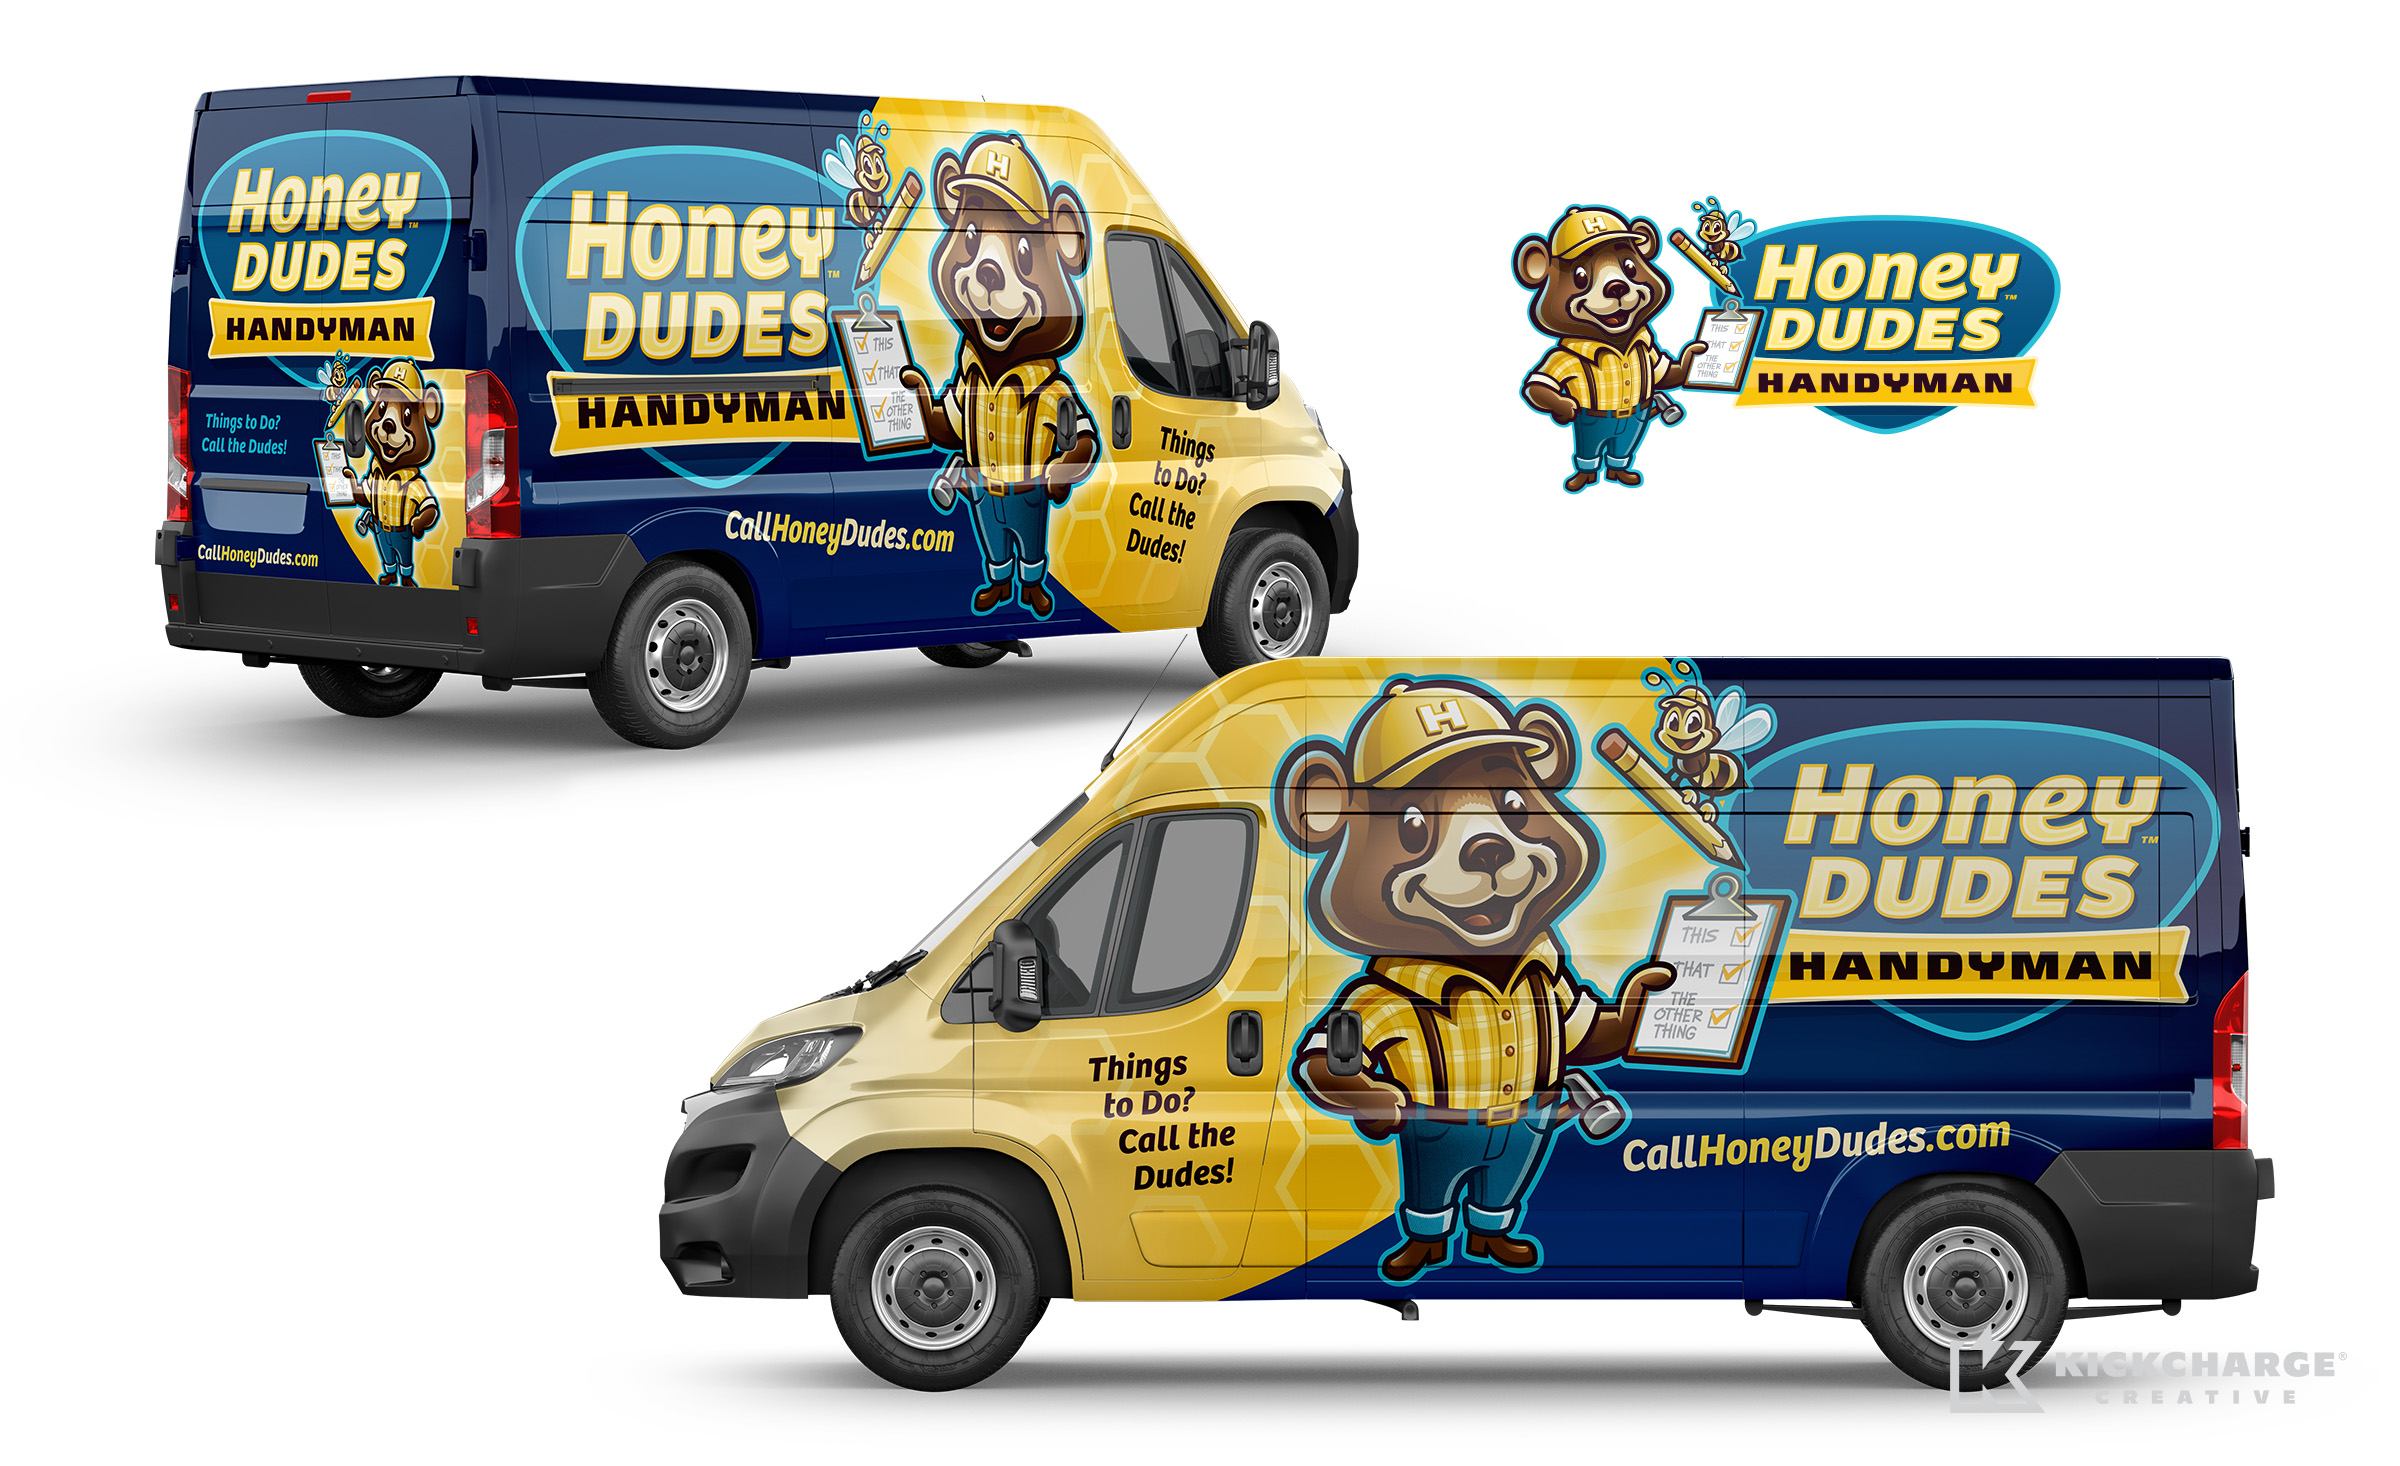 Truck wrap design for Honey Dudes Handyman.